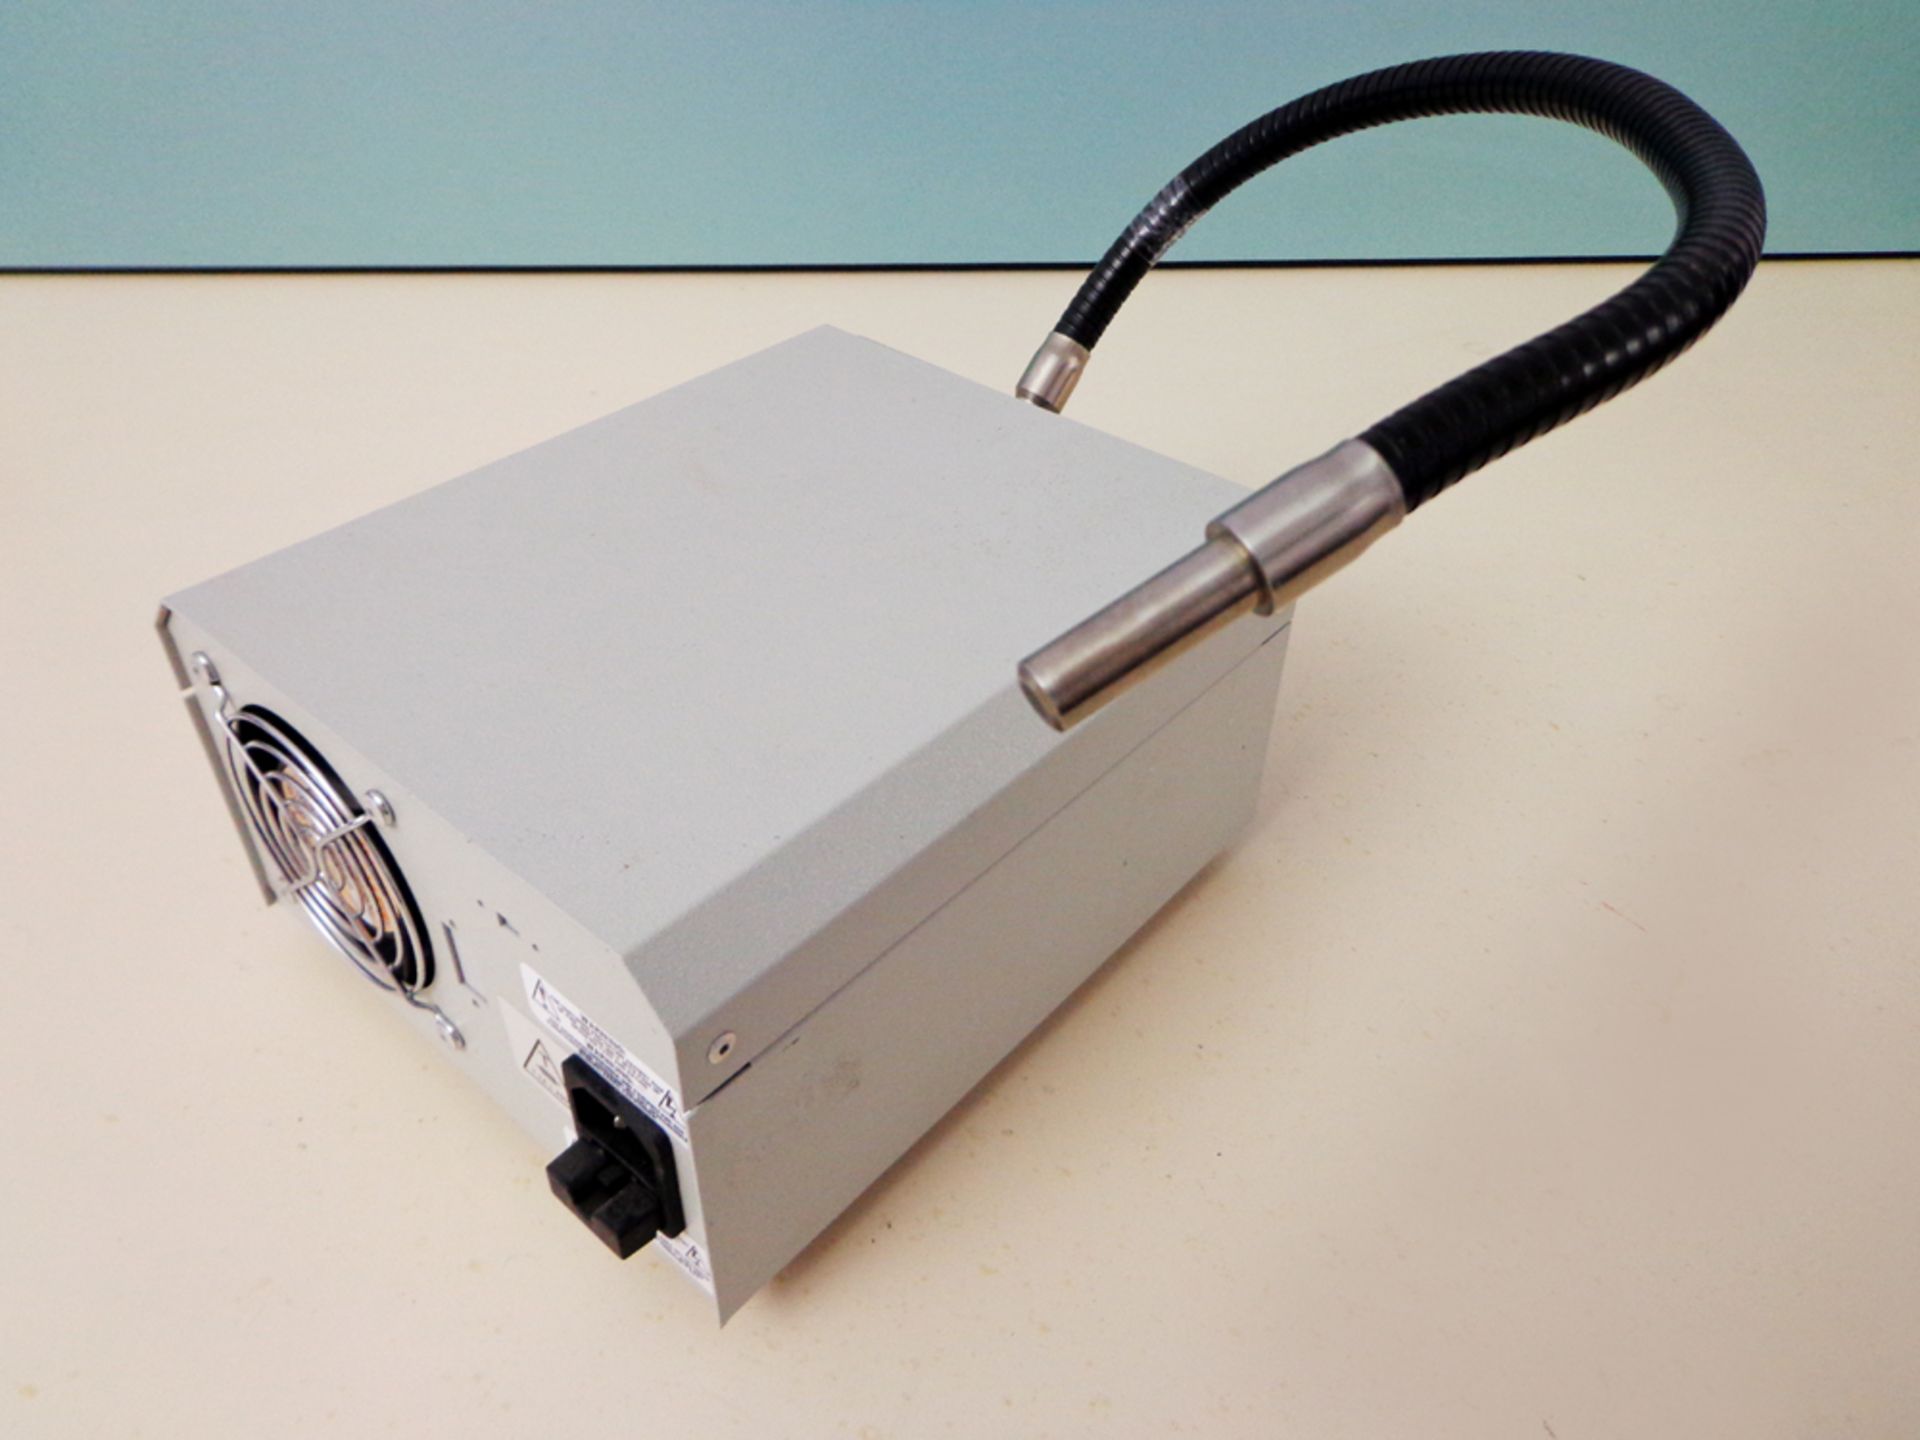 Cole-Parmer Illuminator 41720, model PL8221BN1CP2, with Single Goose Neck Fiber Optic Illuminator, - Image 3 of 8